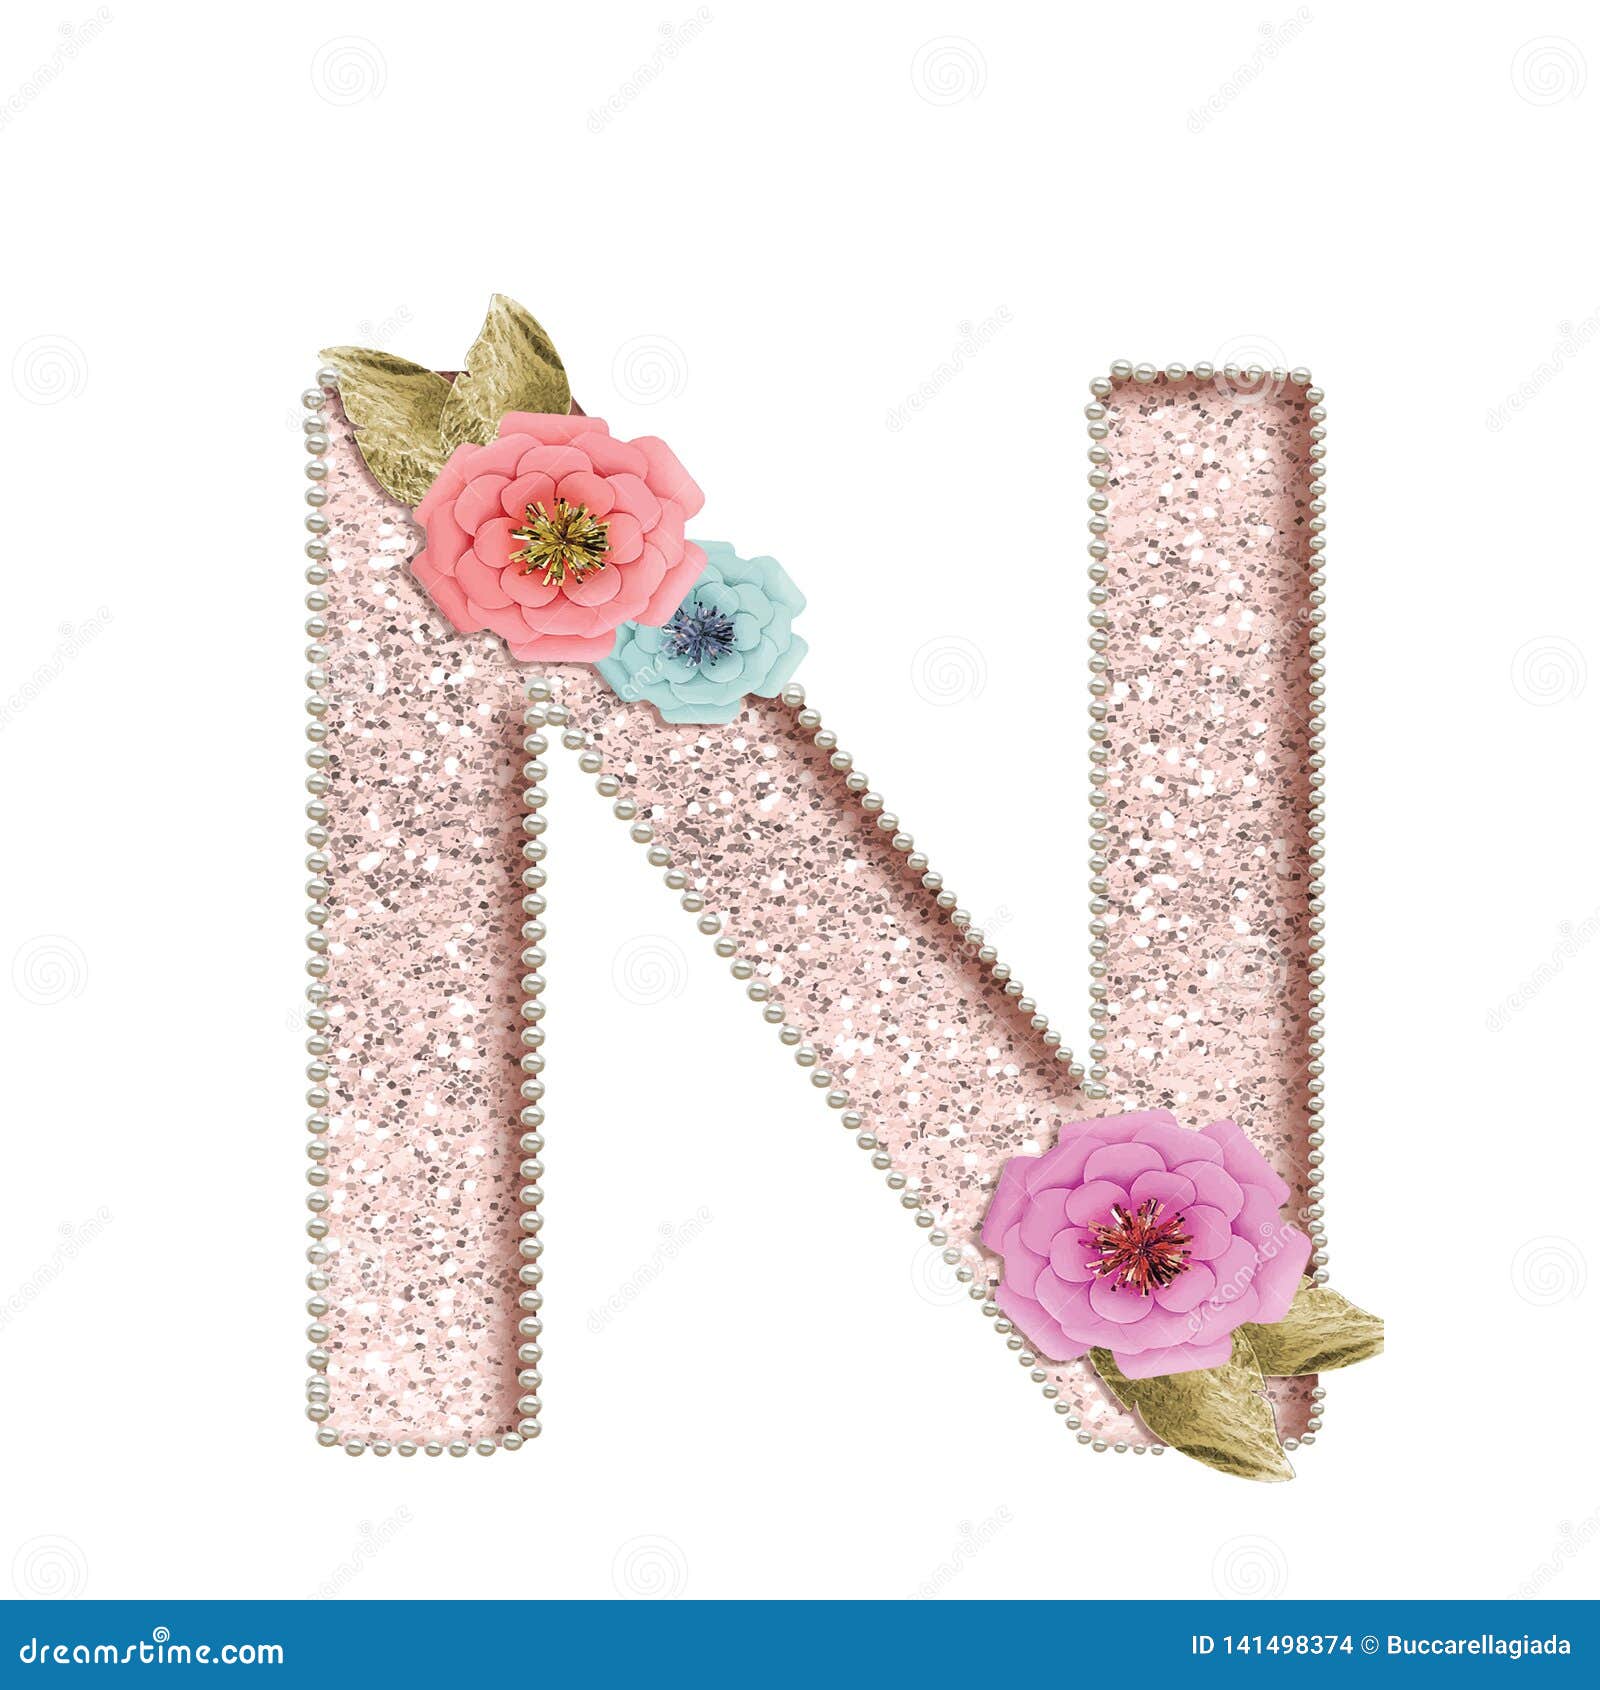 Japanese Cherry Blossom, Letter R Initial Monogram Rose Pink